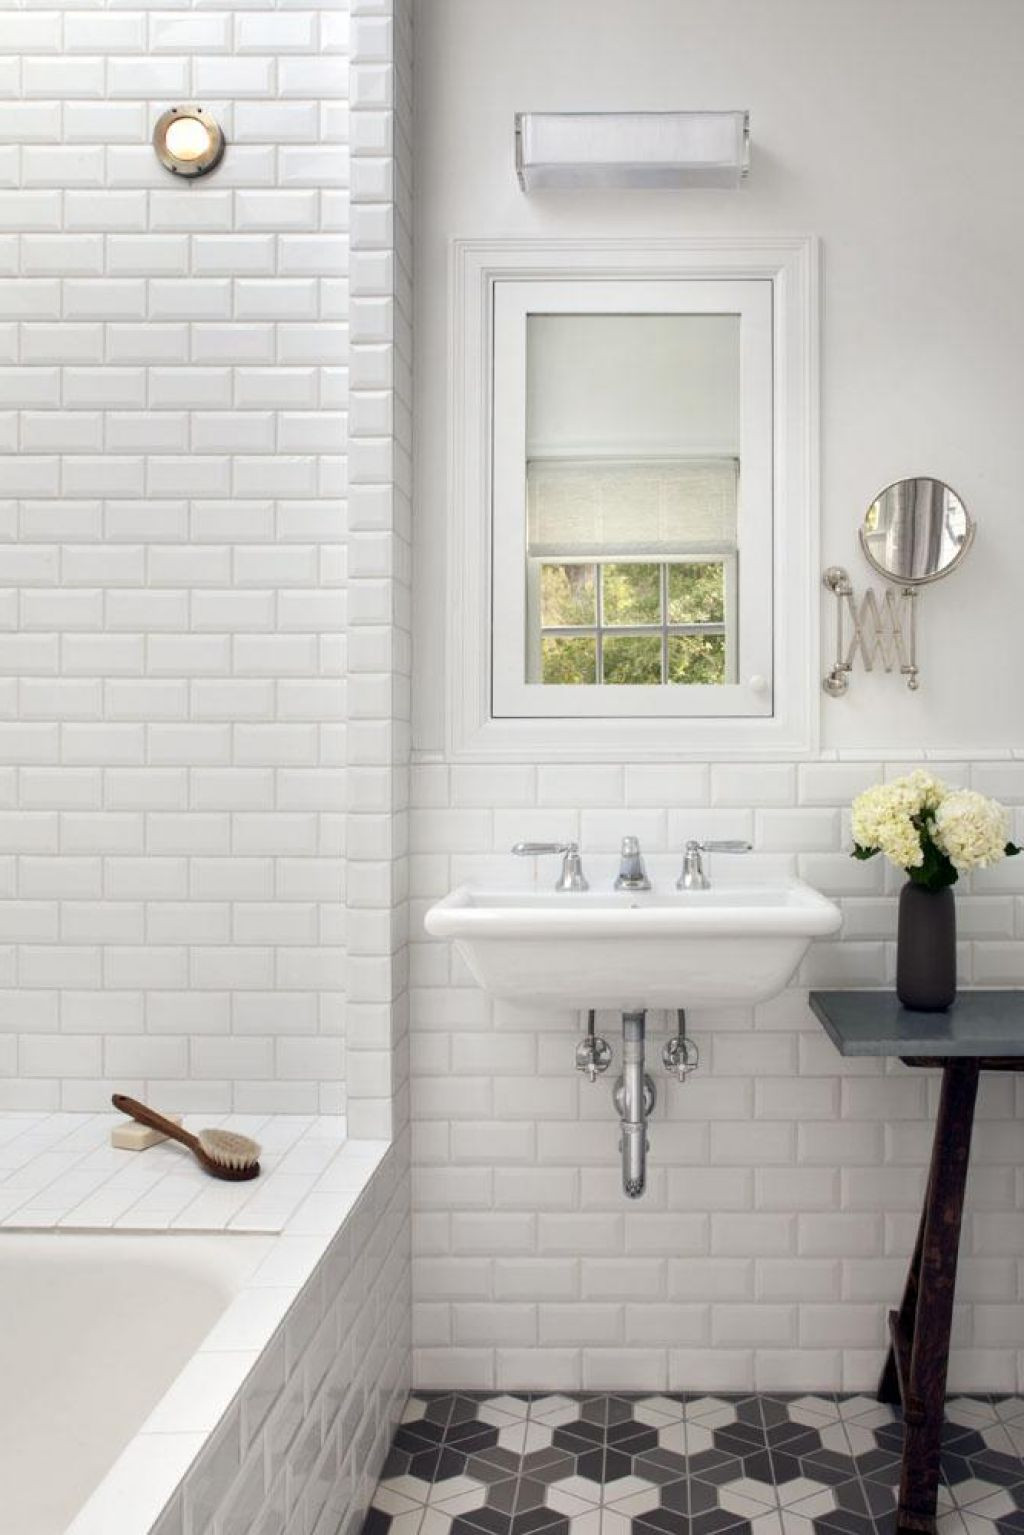 Subway Tile Bathroom Design
 Bathroom Subway Tile Bathrooms For Your Dream Shower And